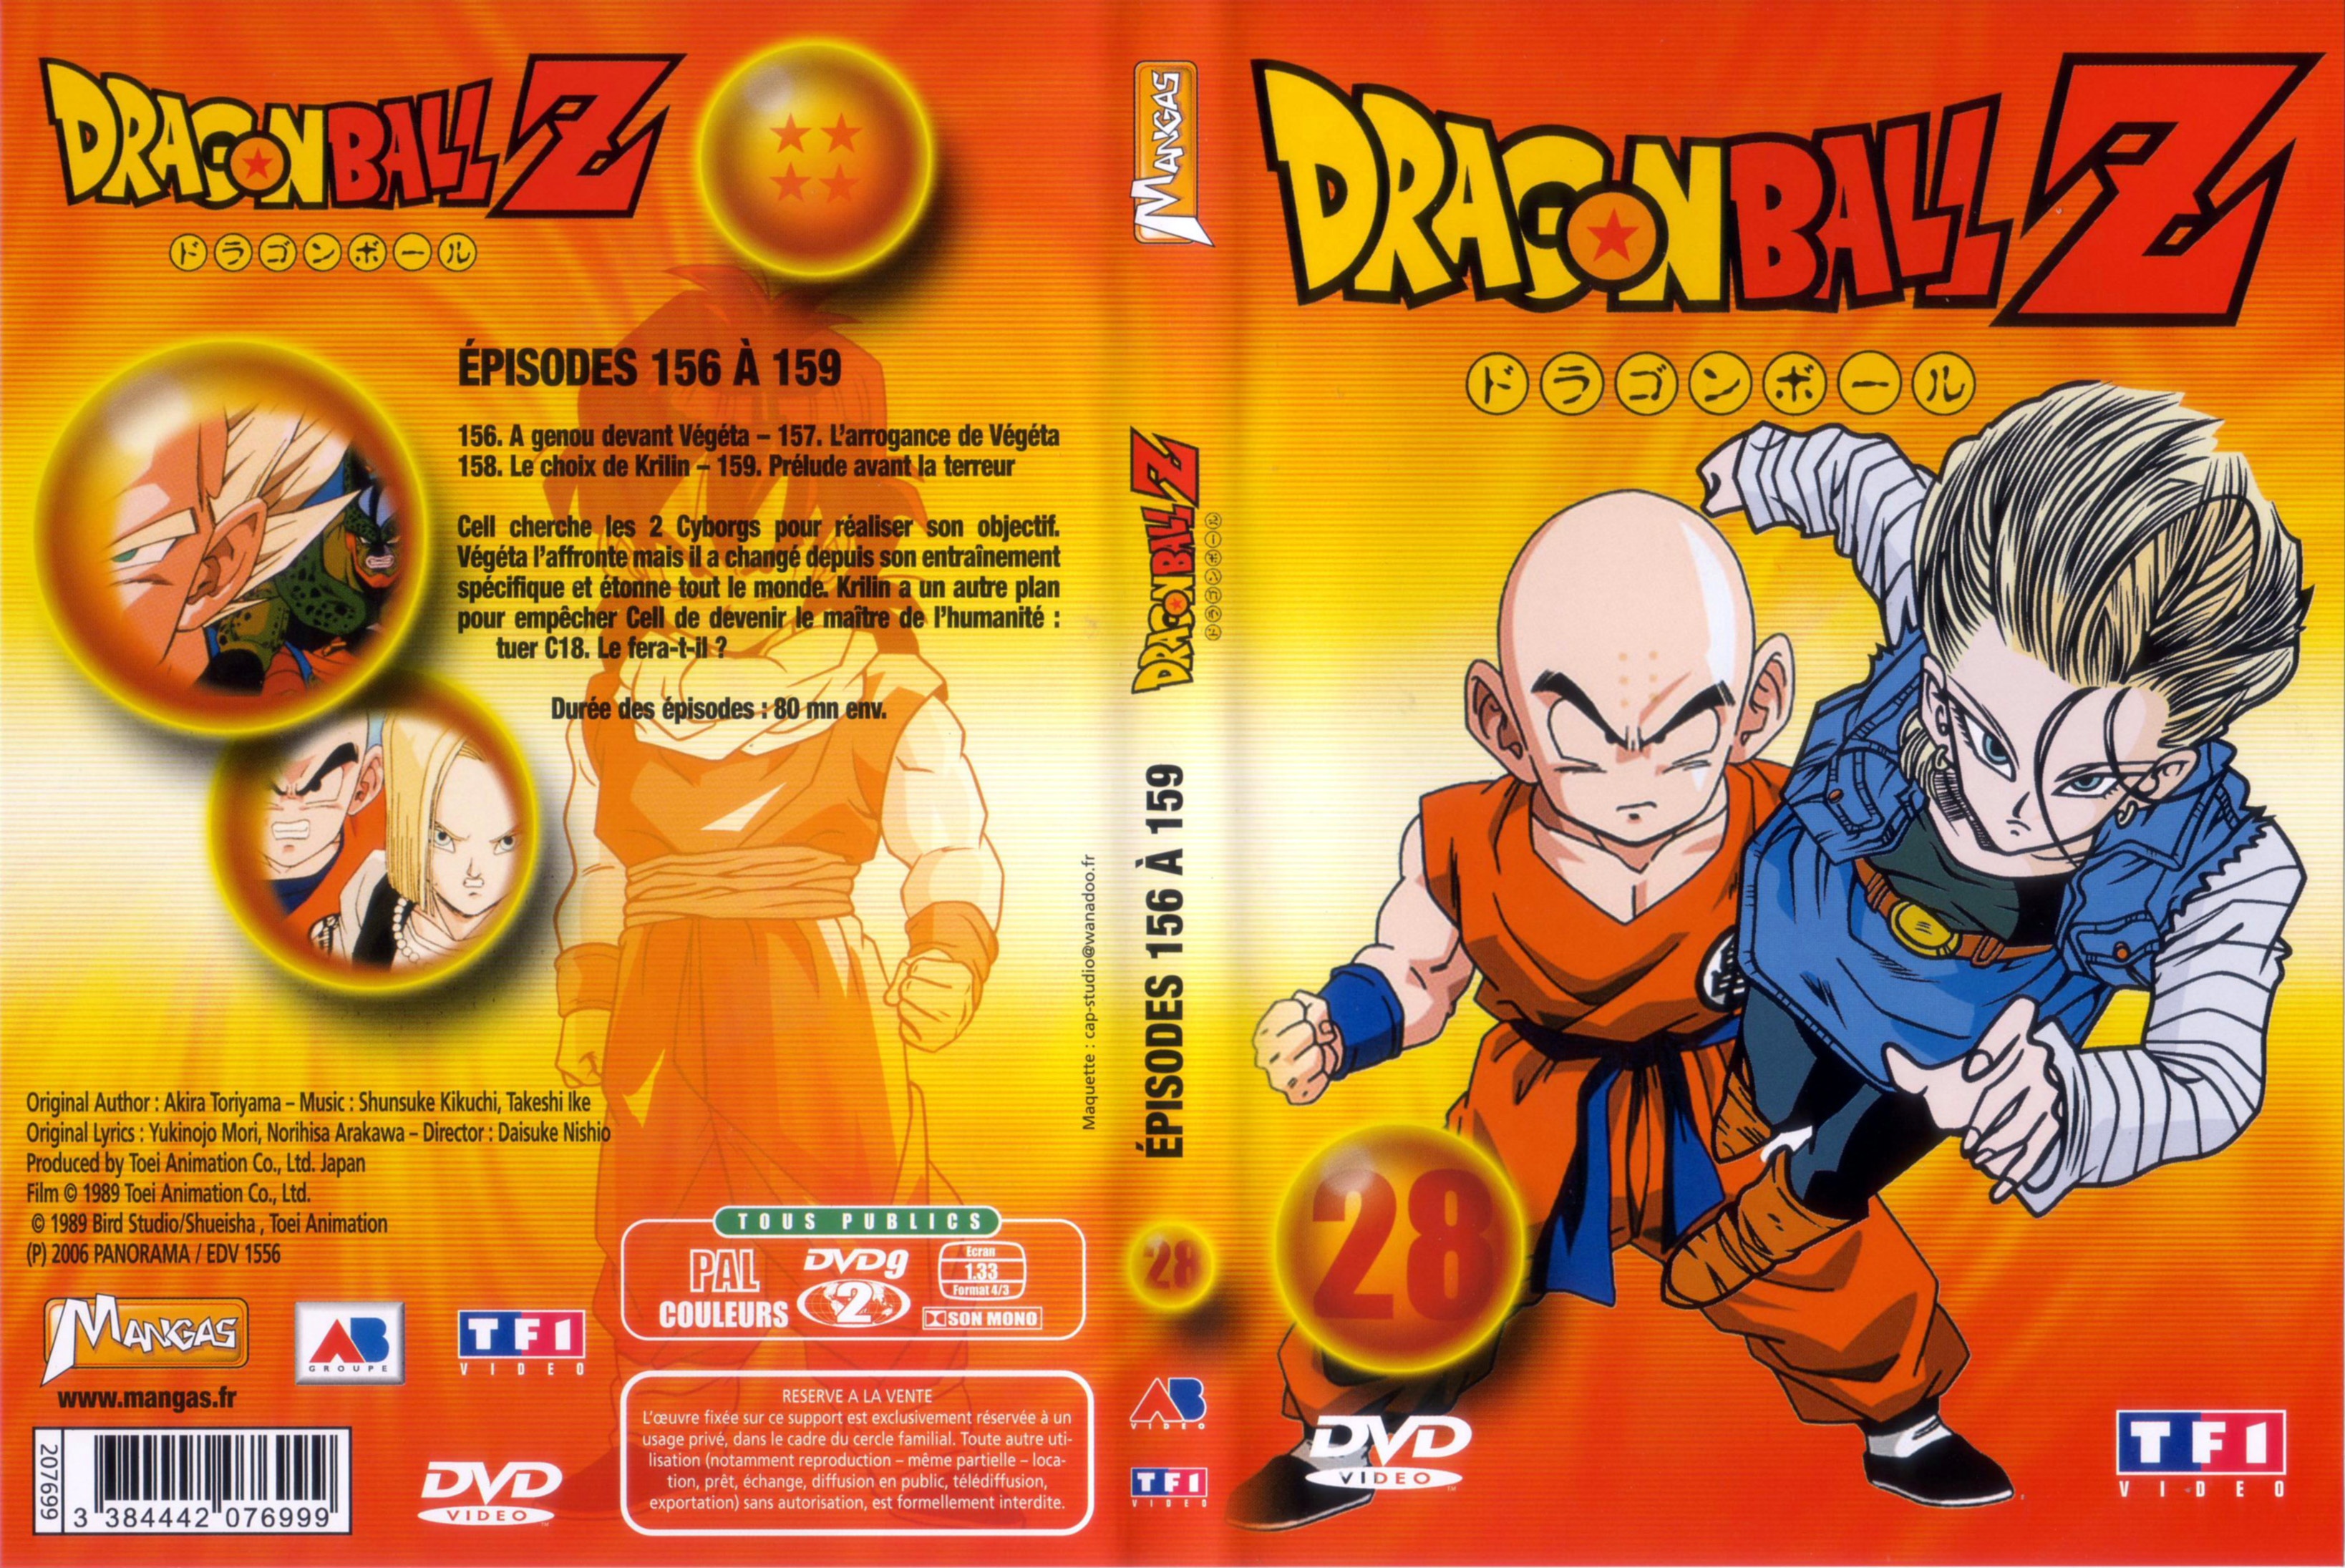 Jaquette DVD Dragon ball Z vol 28